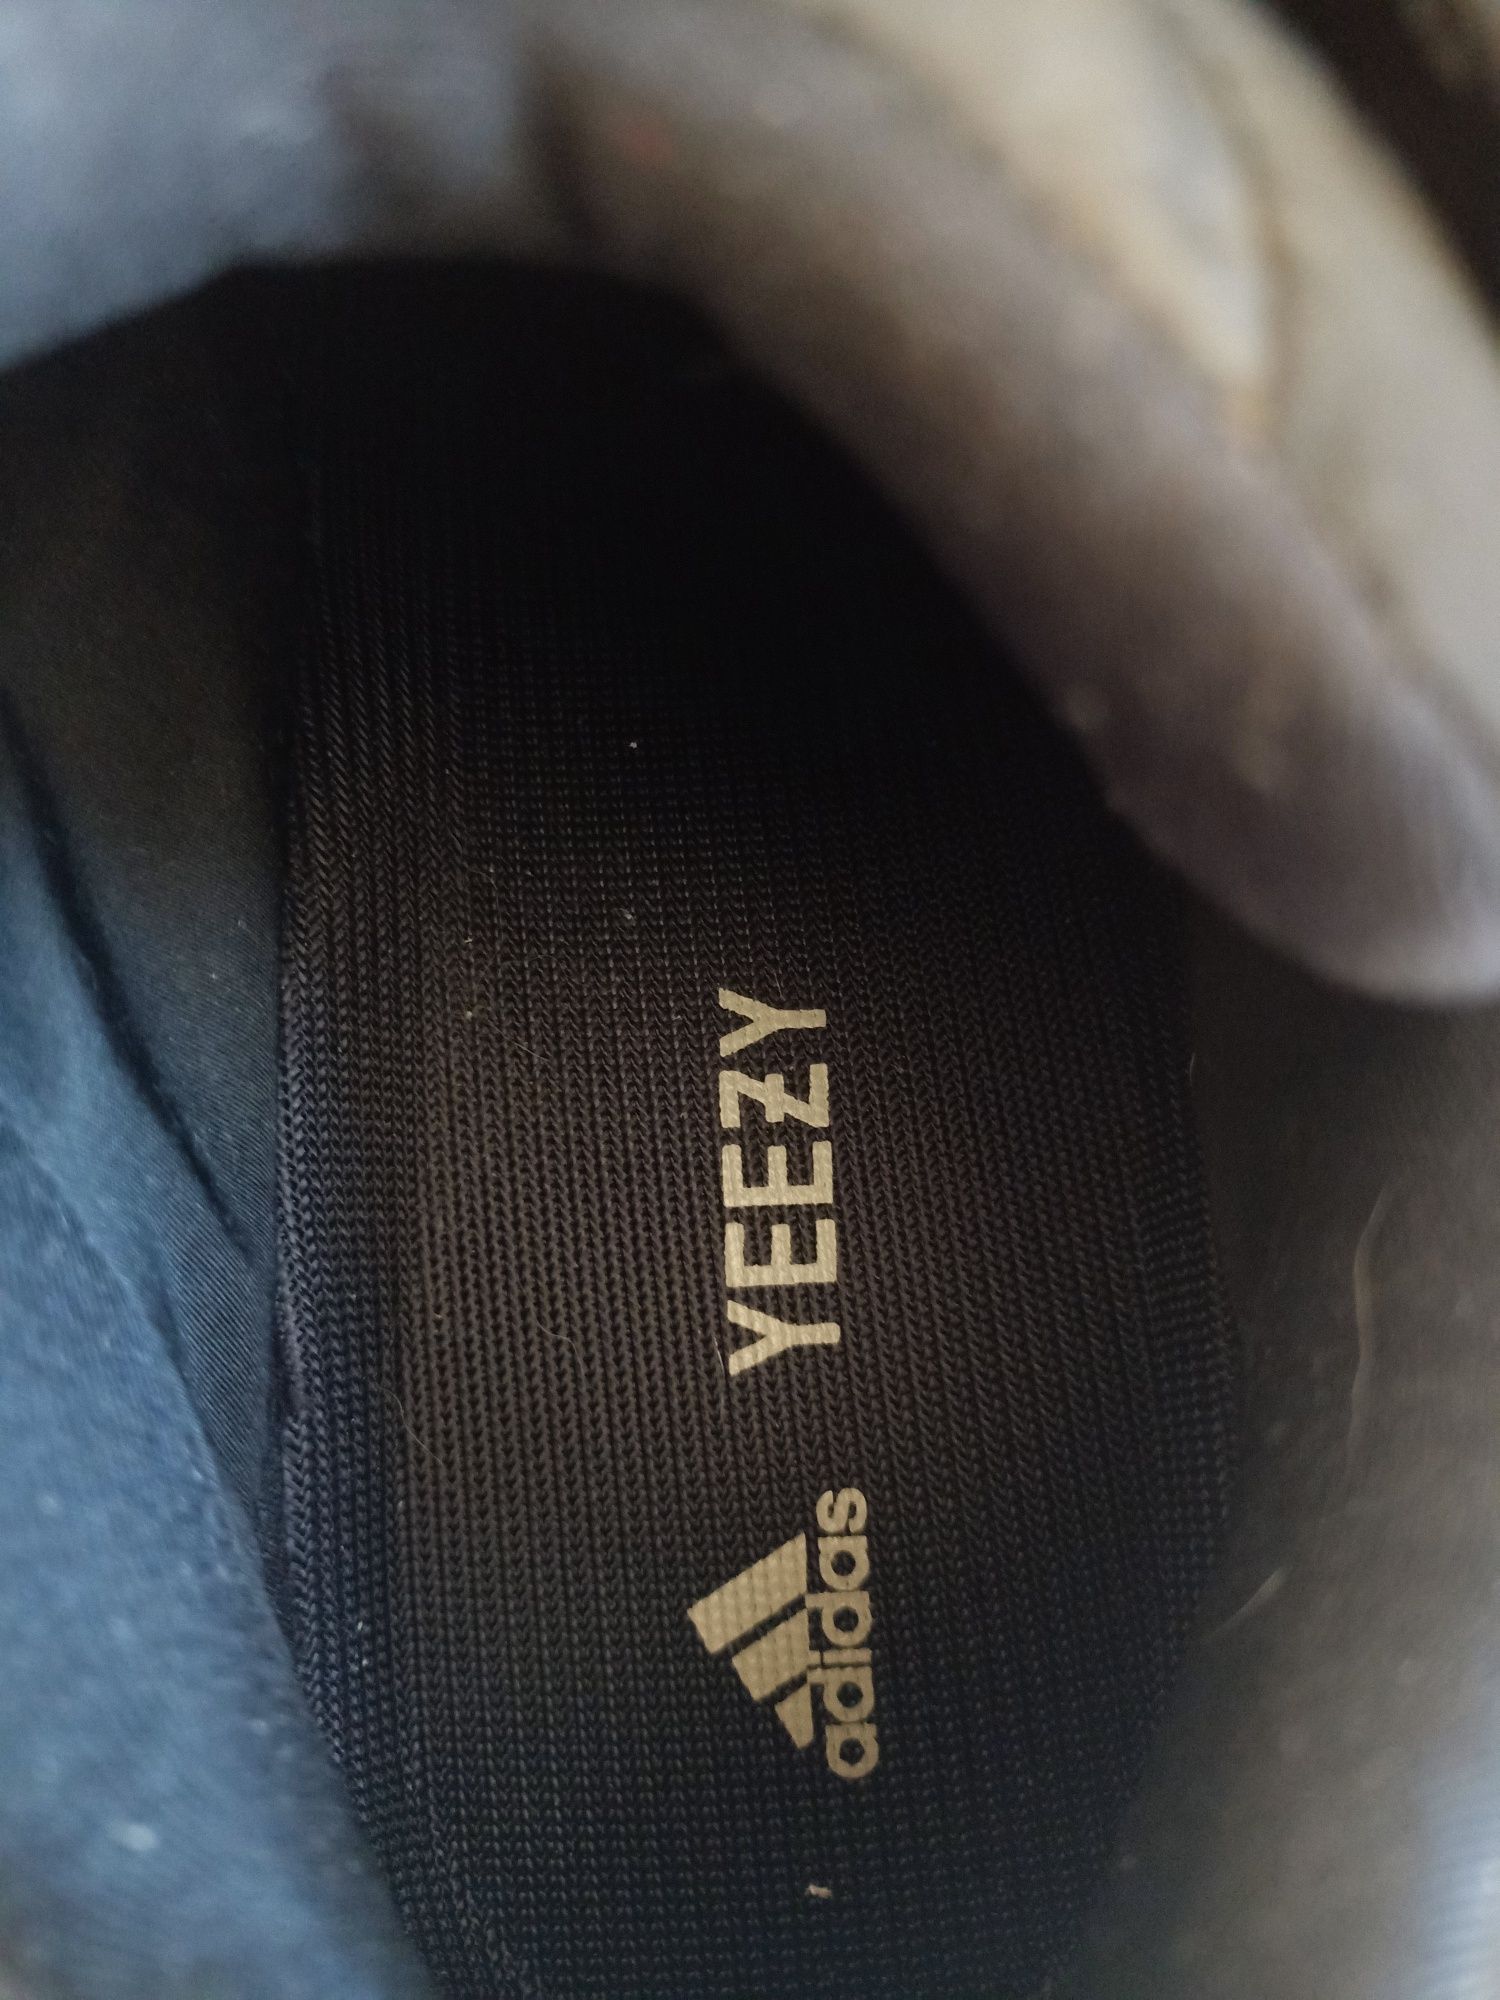 Adidas Yeezy 700 MNVN